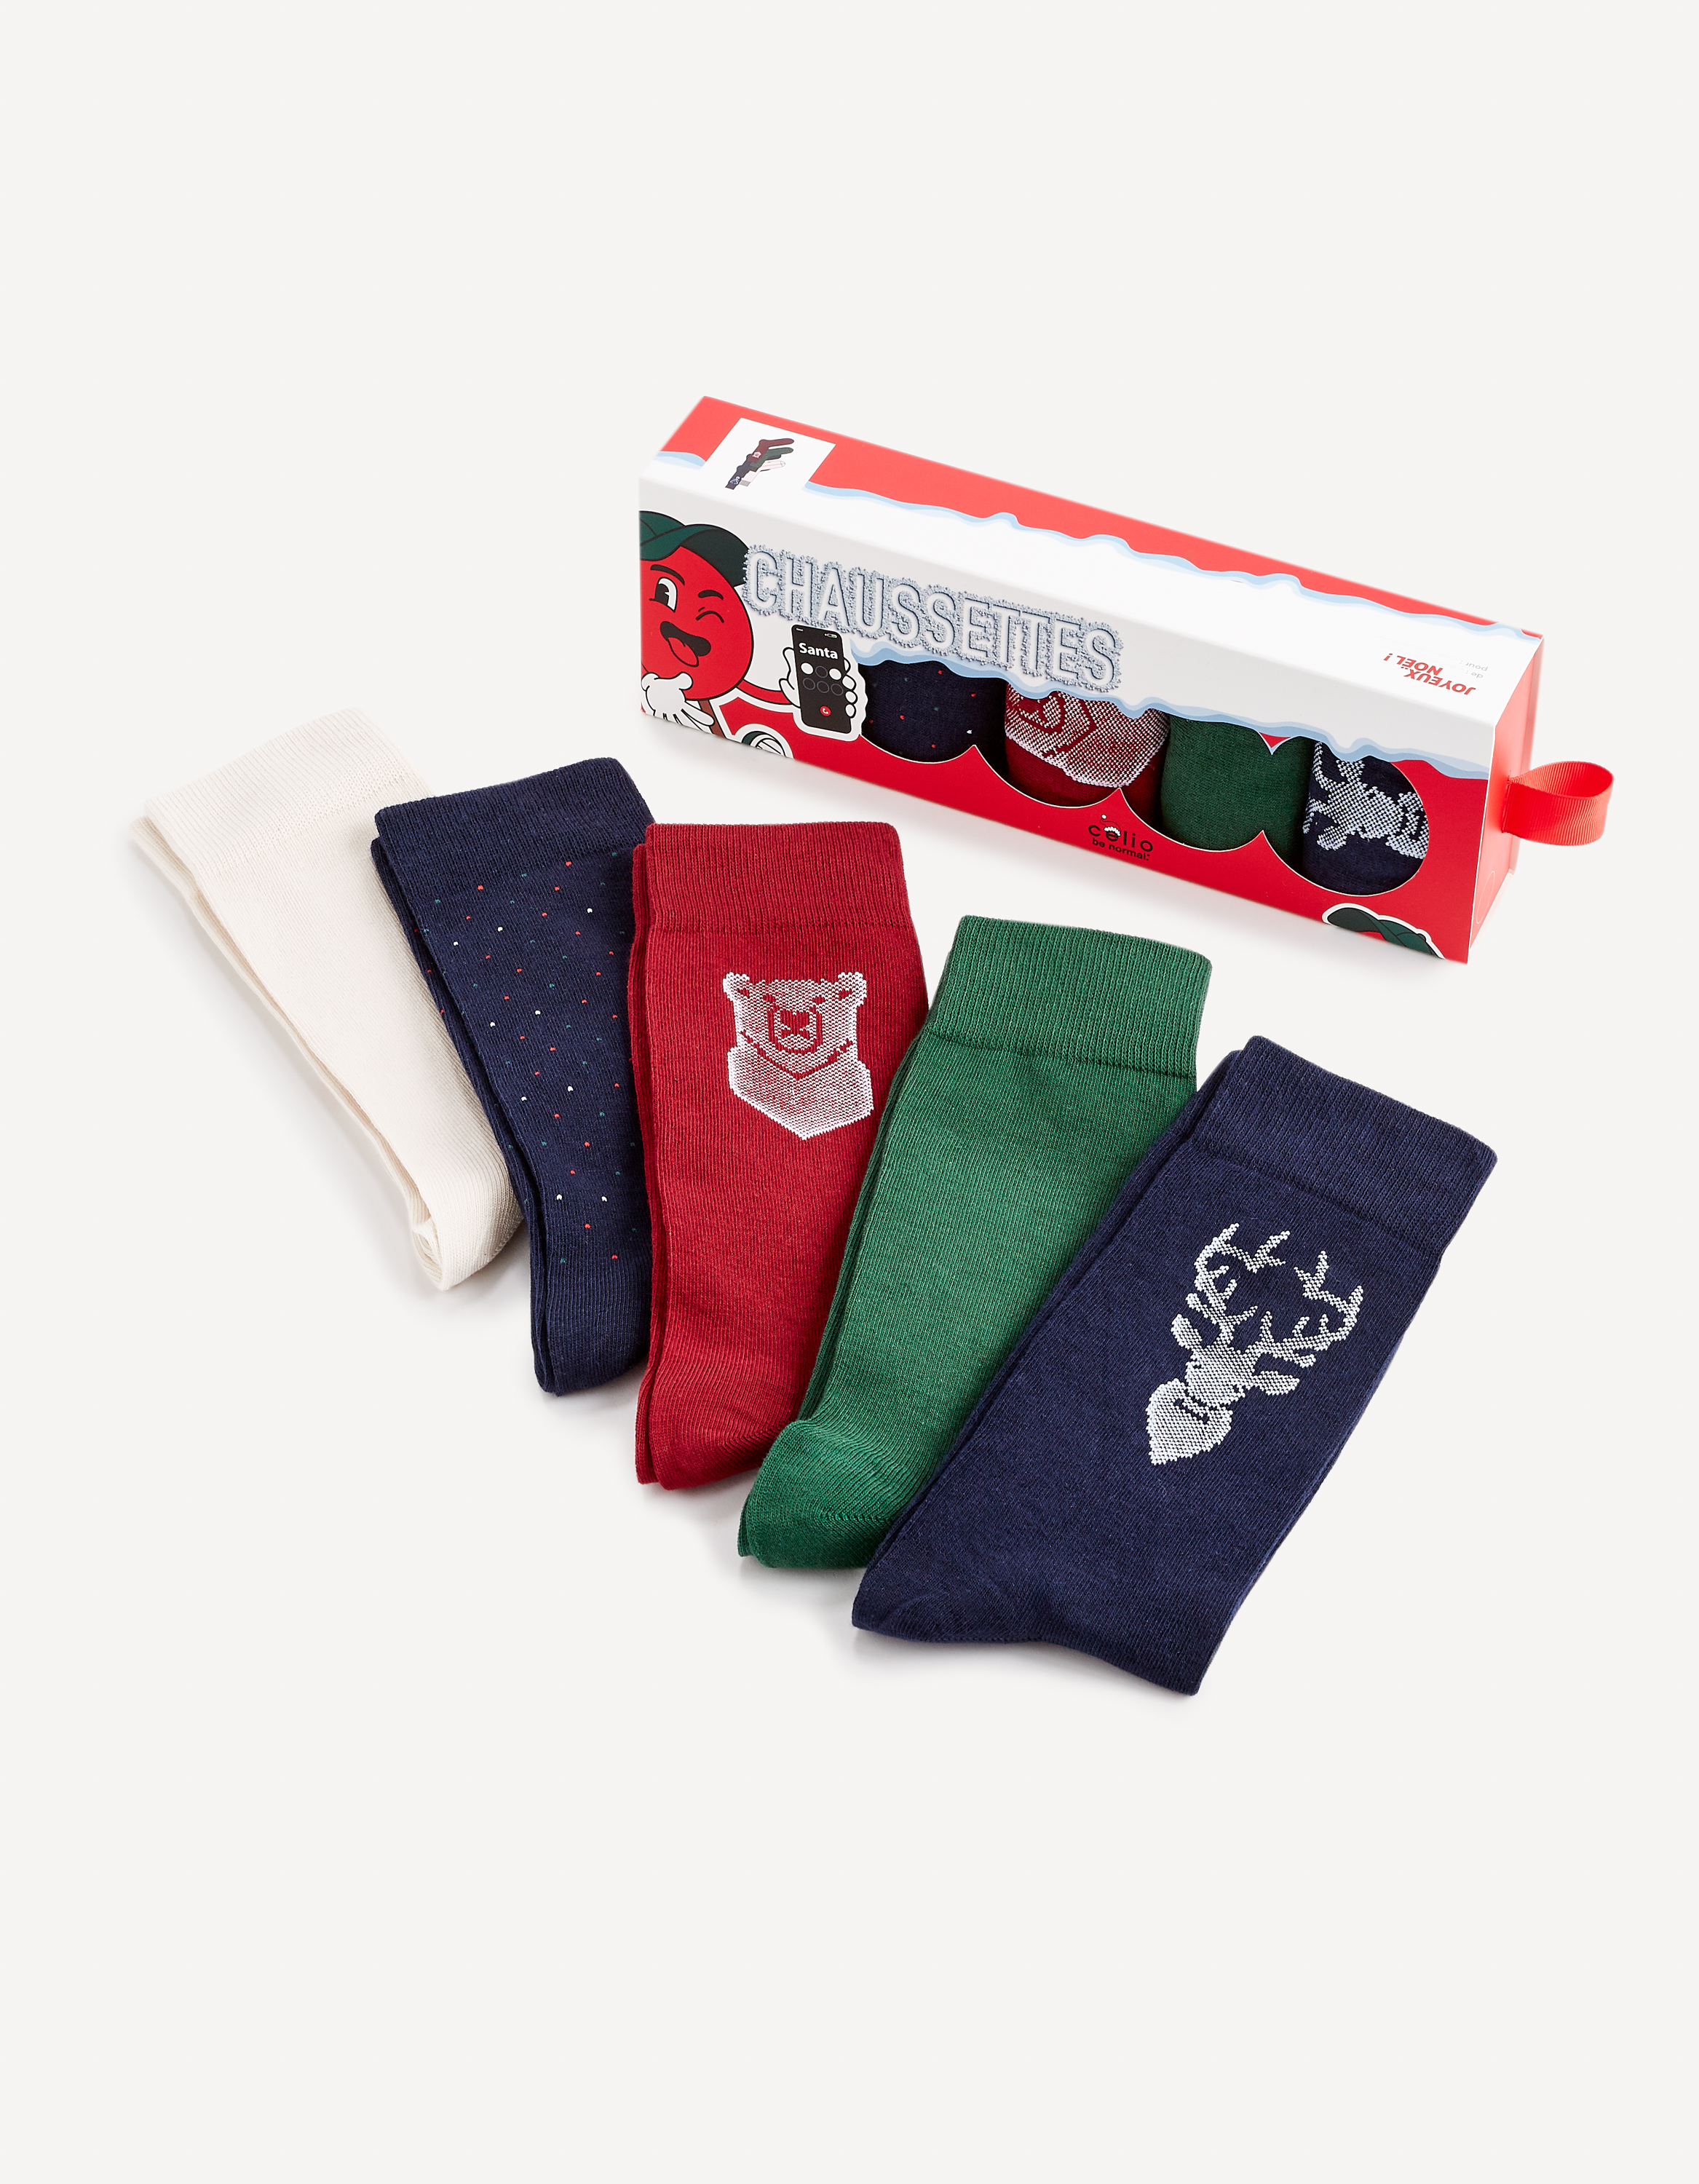 Celio Socks in Gift Box, 5 Pairs - Men's